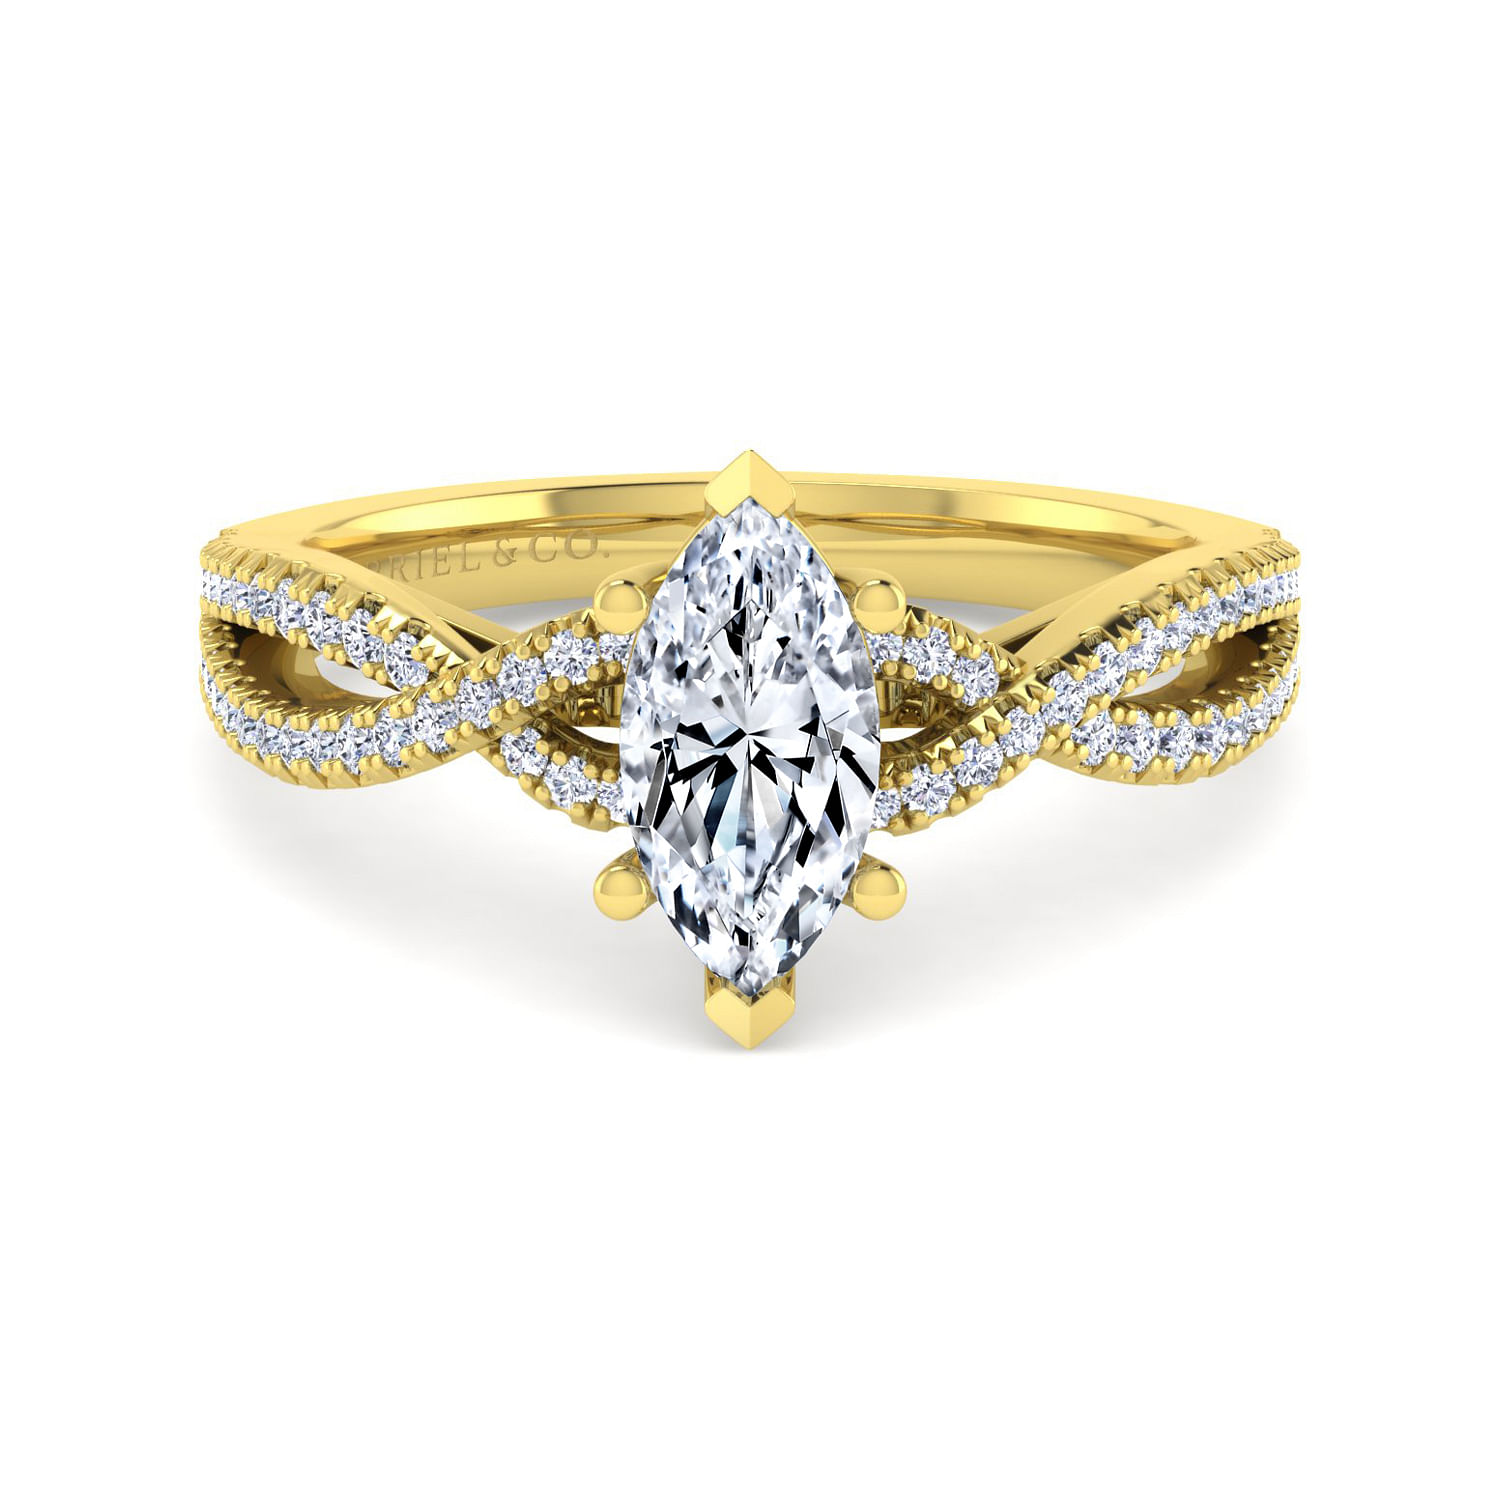 Gina---14K-Yellow-Gold-Twisted-Marquise-Shape-Diamond-Engagement-Ring1